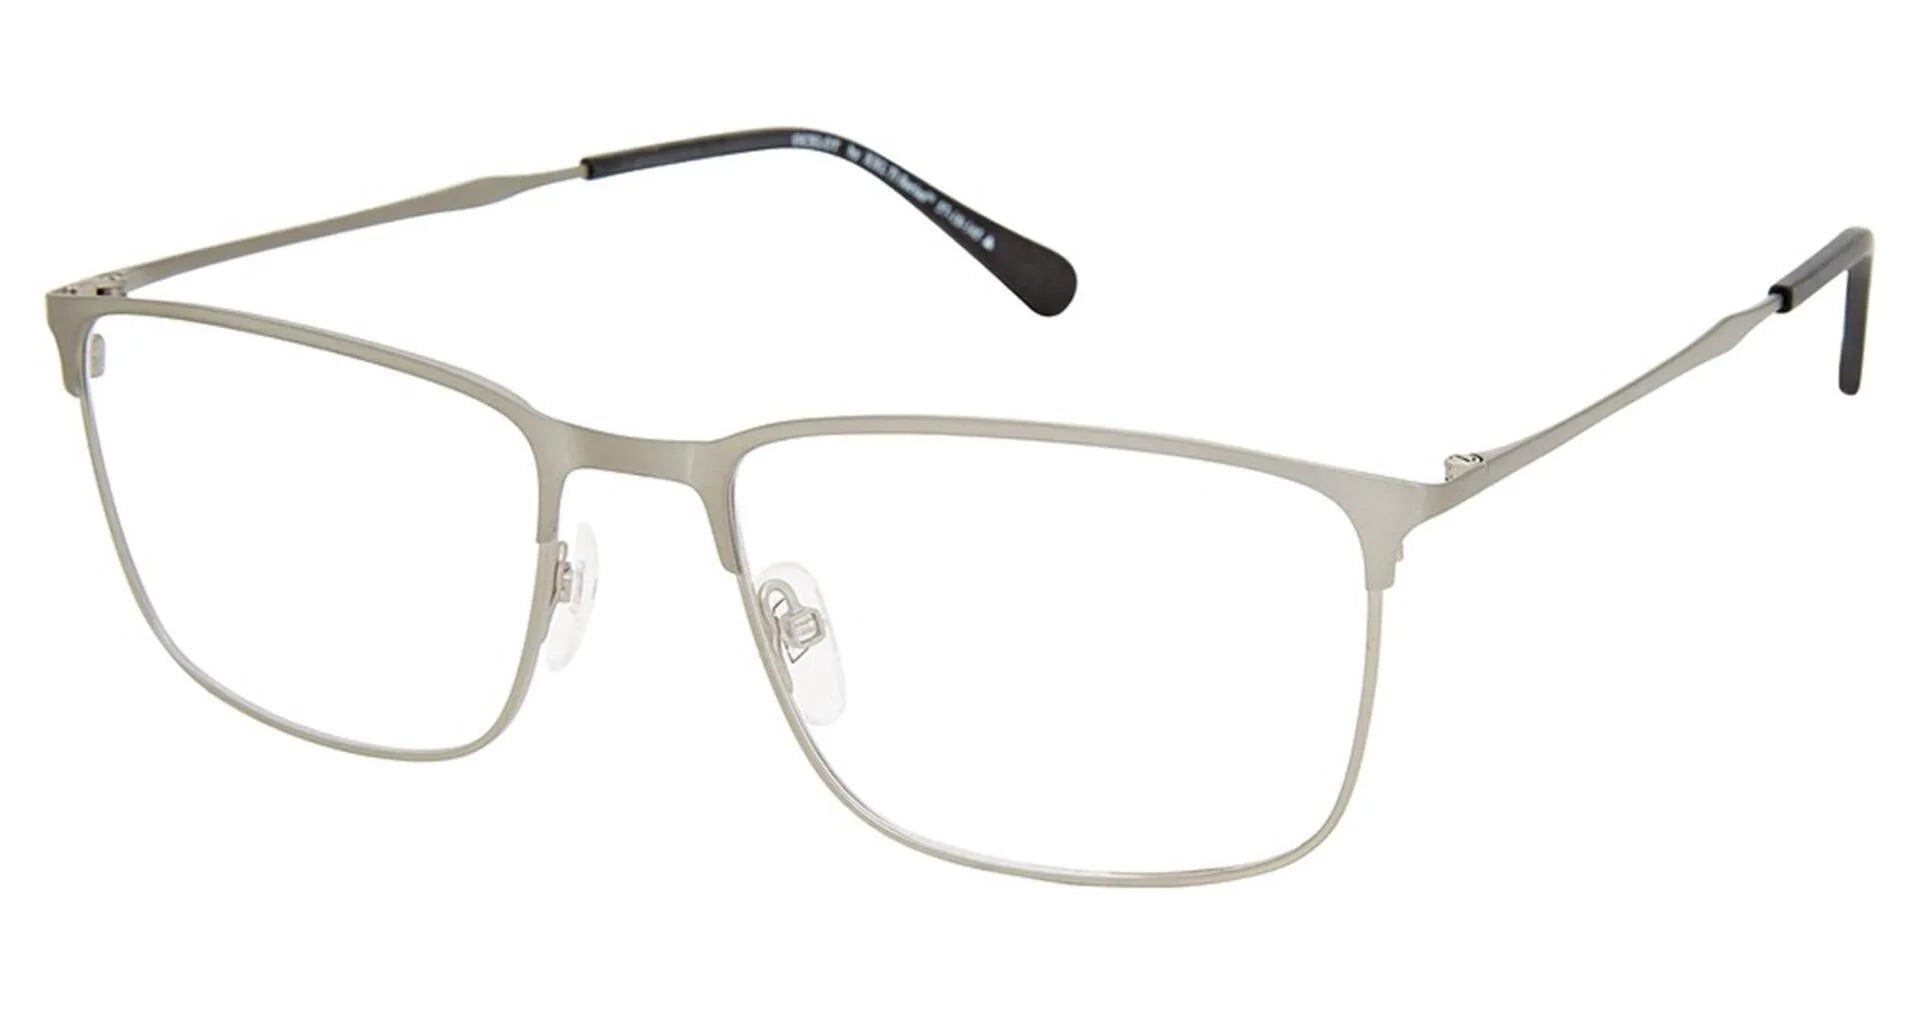 XXL Eyewear Ocelot Eyeglasses Gunmetal